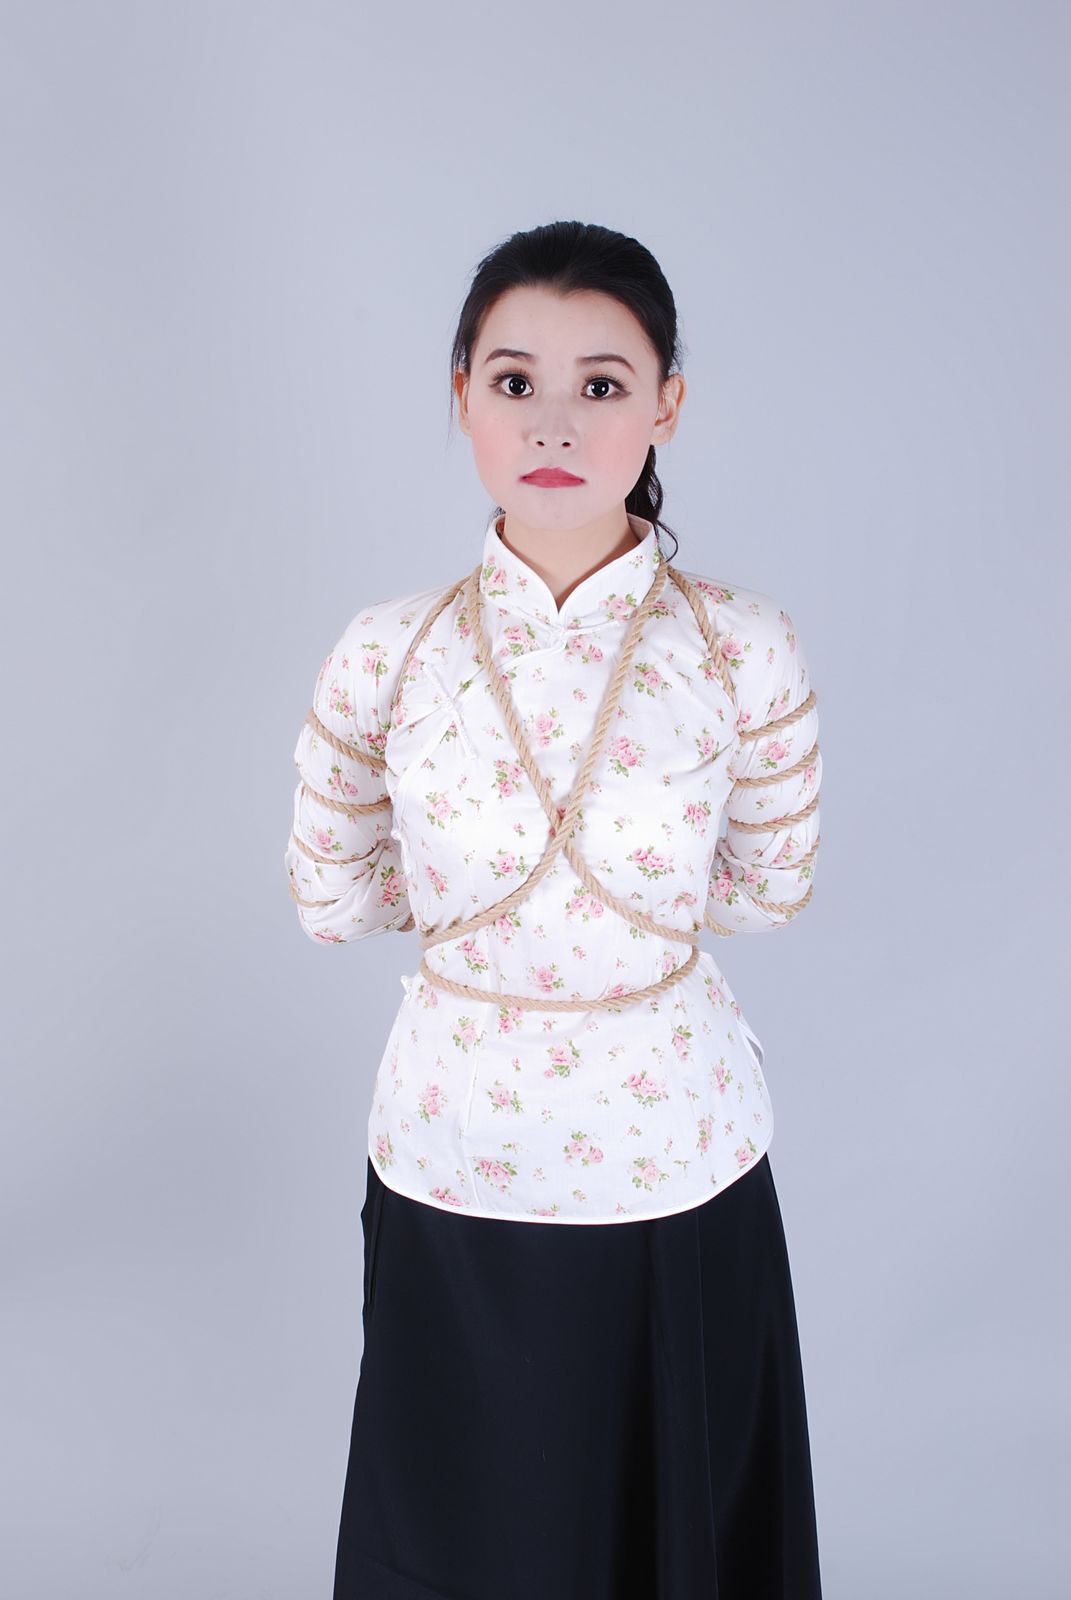 Jiaxin, a captive girl student